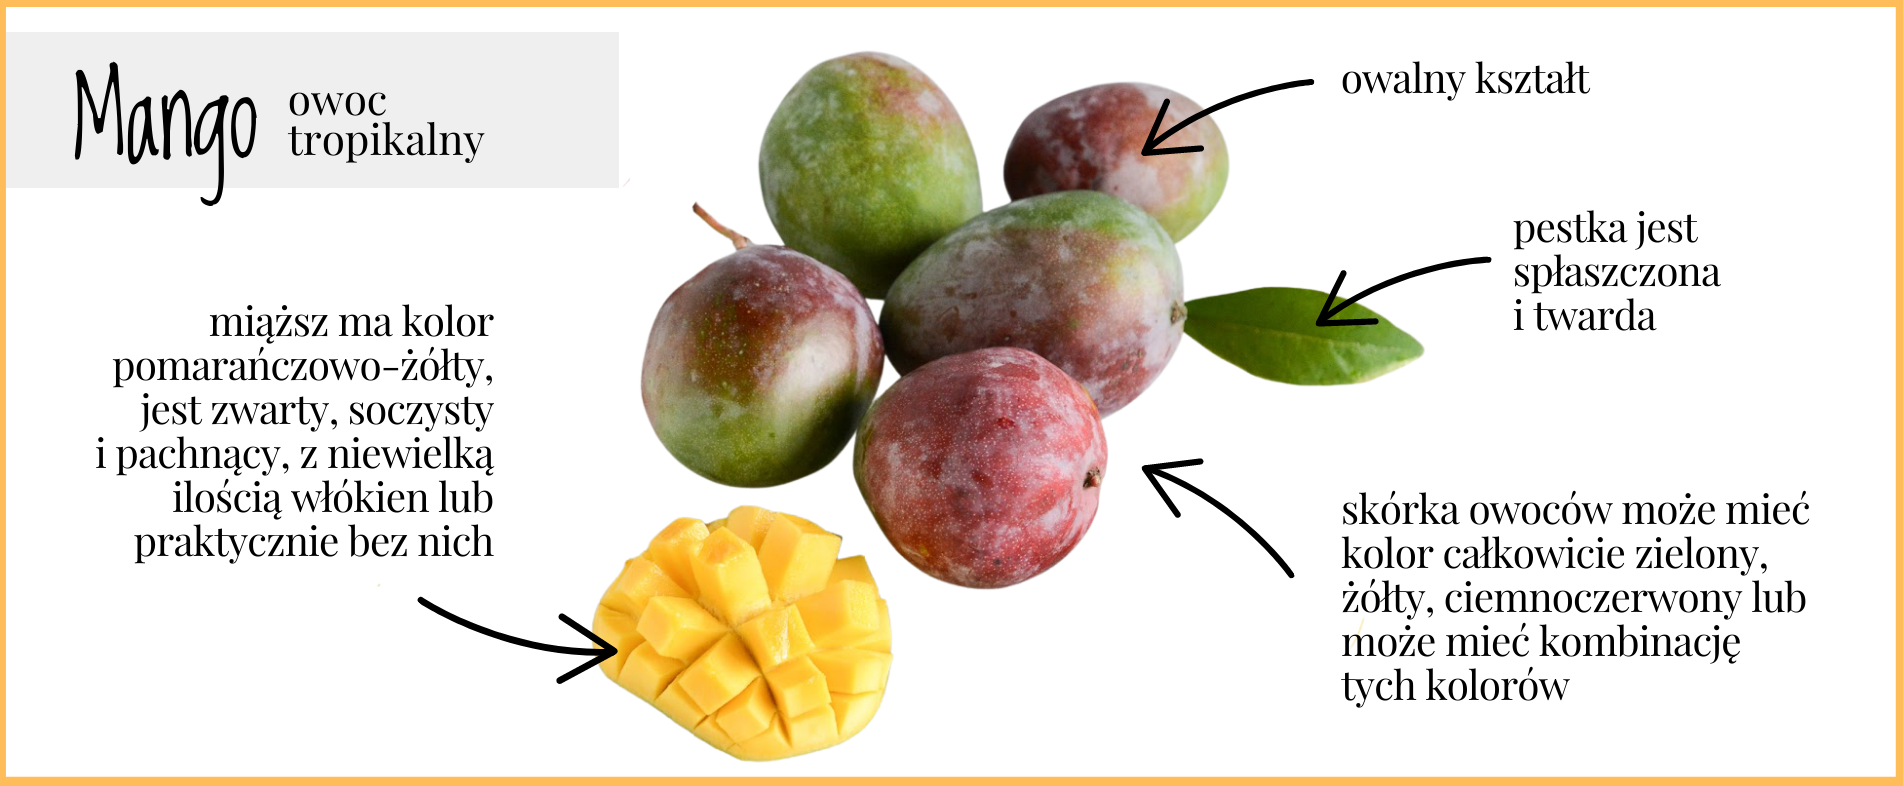 Mango: owoc tropikalny